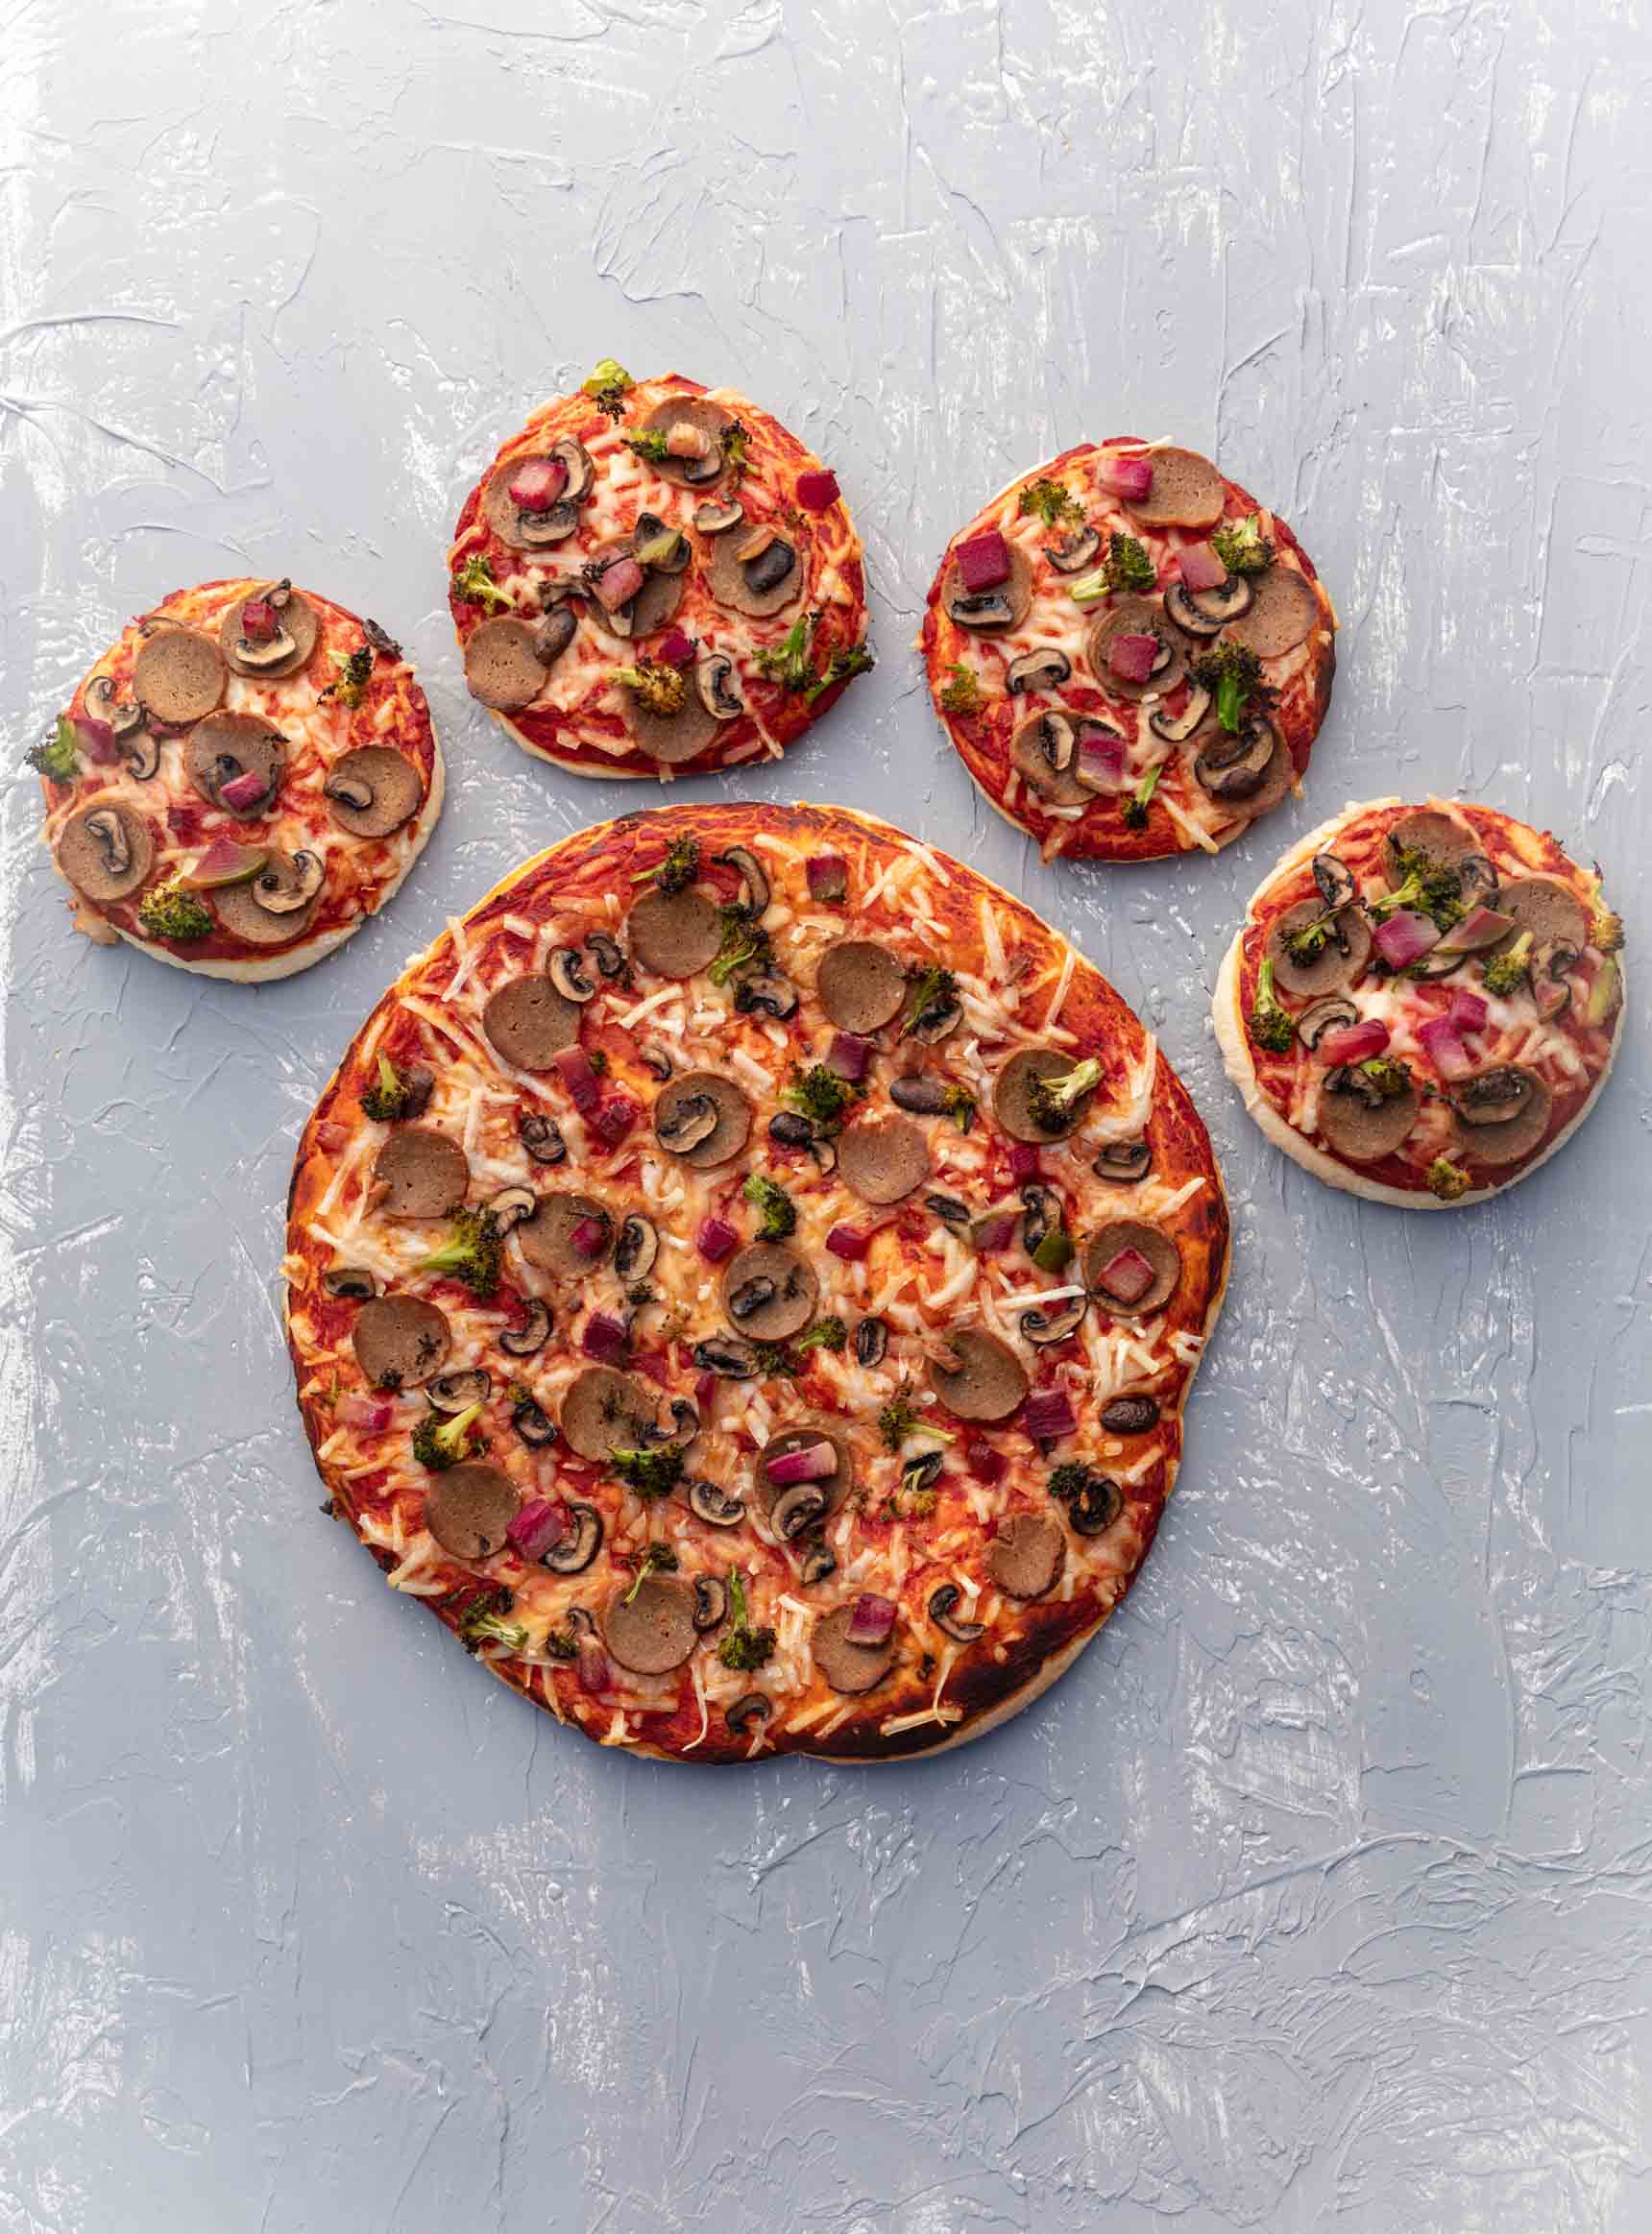 vegan pizza shaped like a paw print.